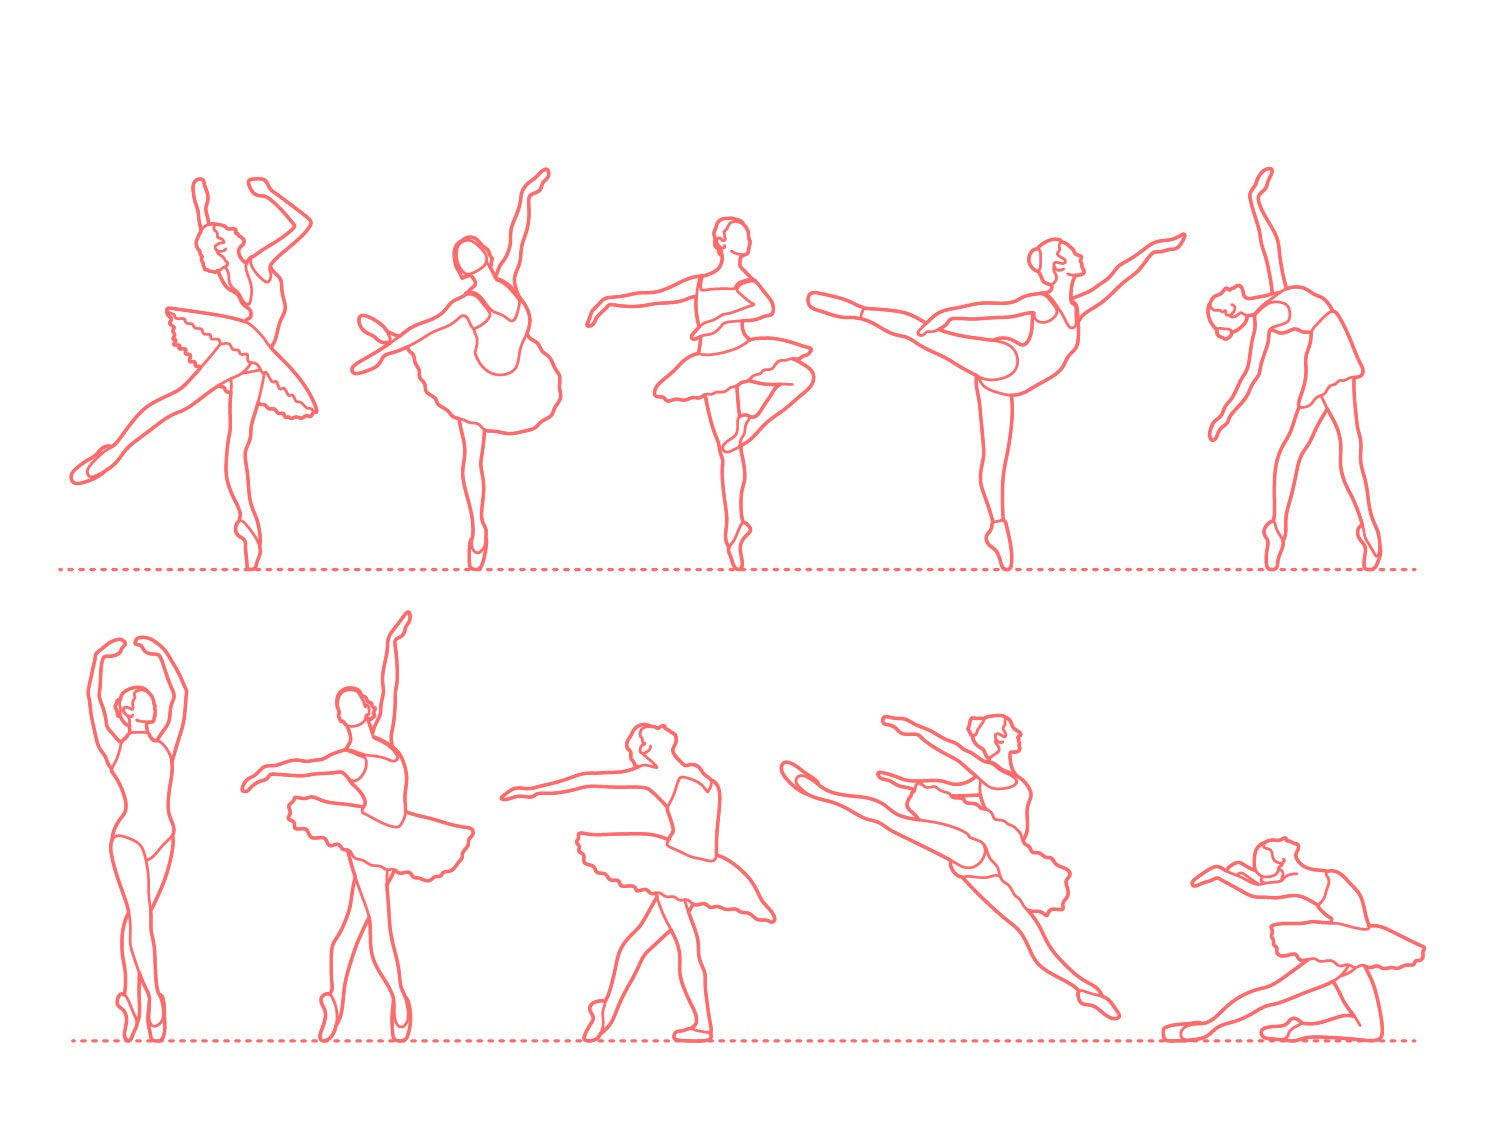 Sketch Vector Pictures of Different Ballet Dancers, Vectors | GraphicRiver